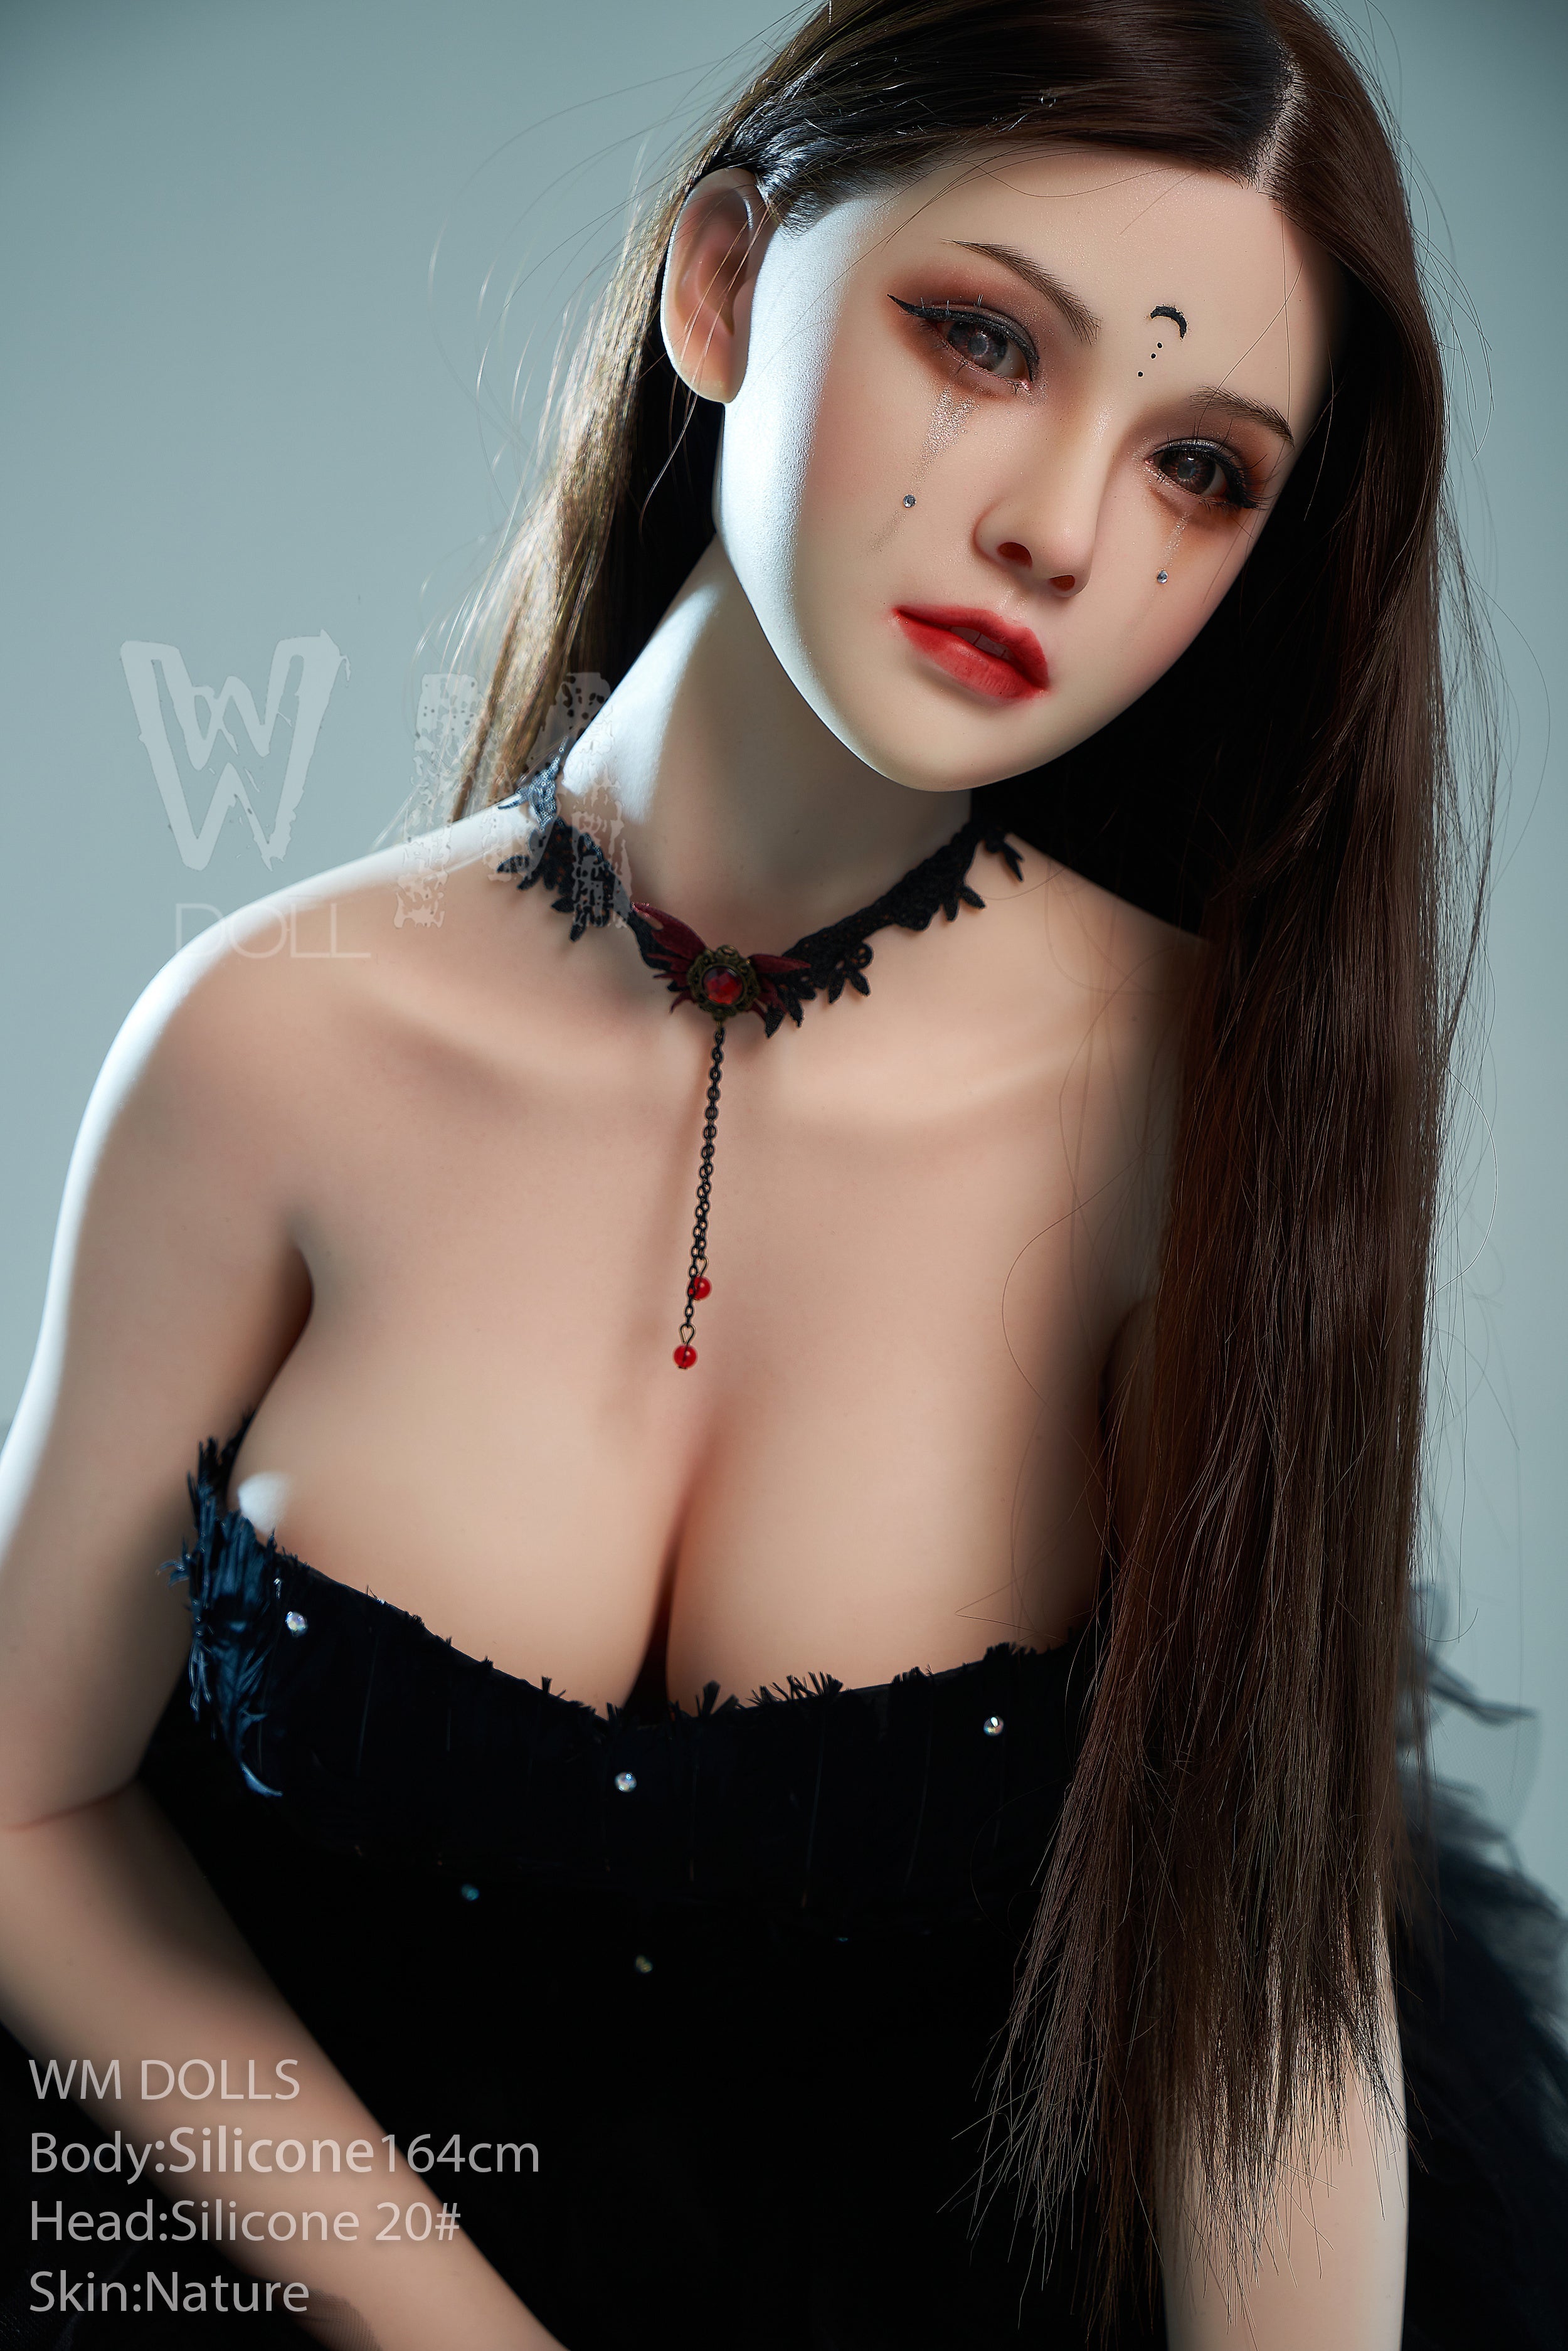 WM Doll 164 cm D Silicone - Reagan | Buy Sex Dolls at DOLLS ACTUALLY